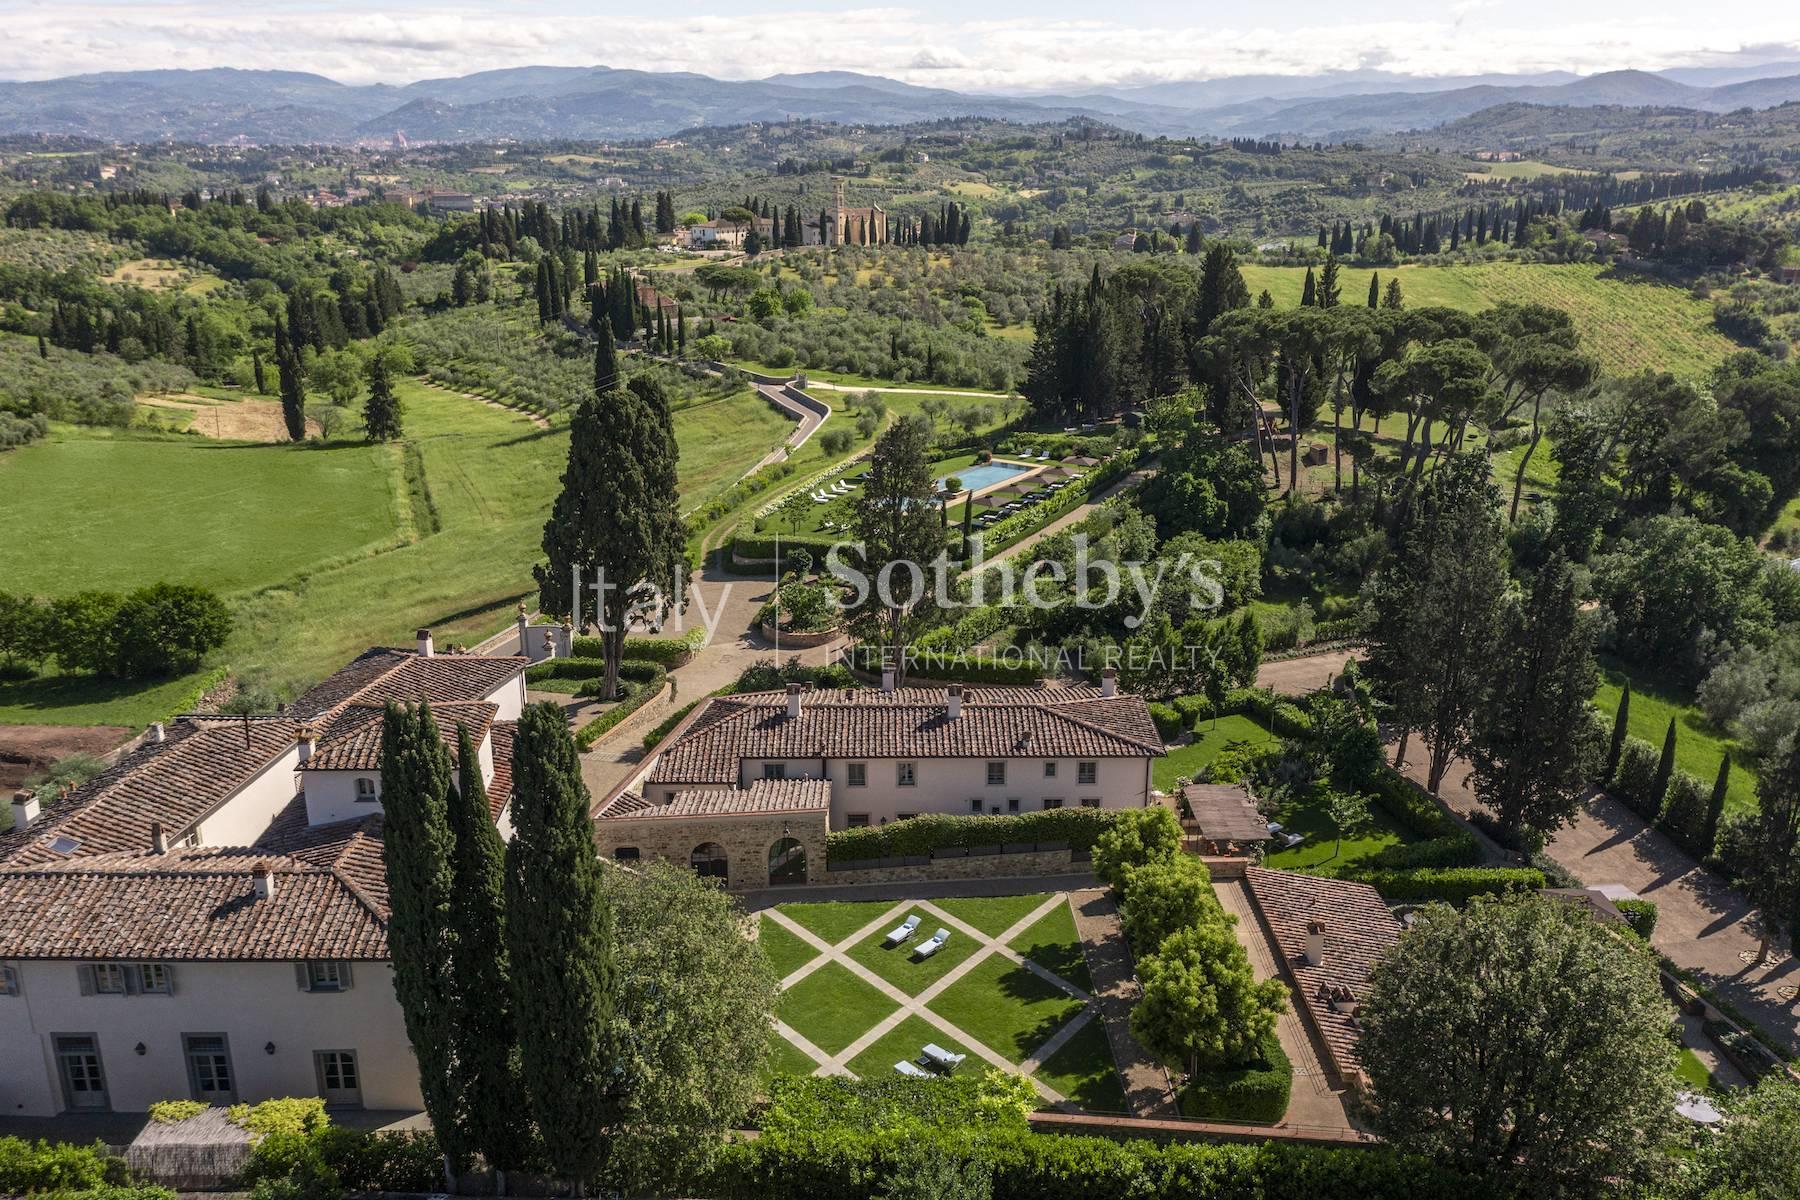 Villa Medici, stupenda tenuta vicina a Firenze - 33